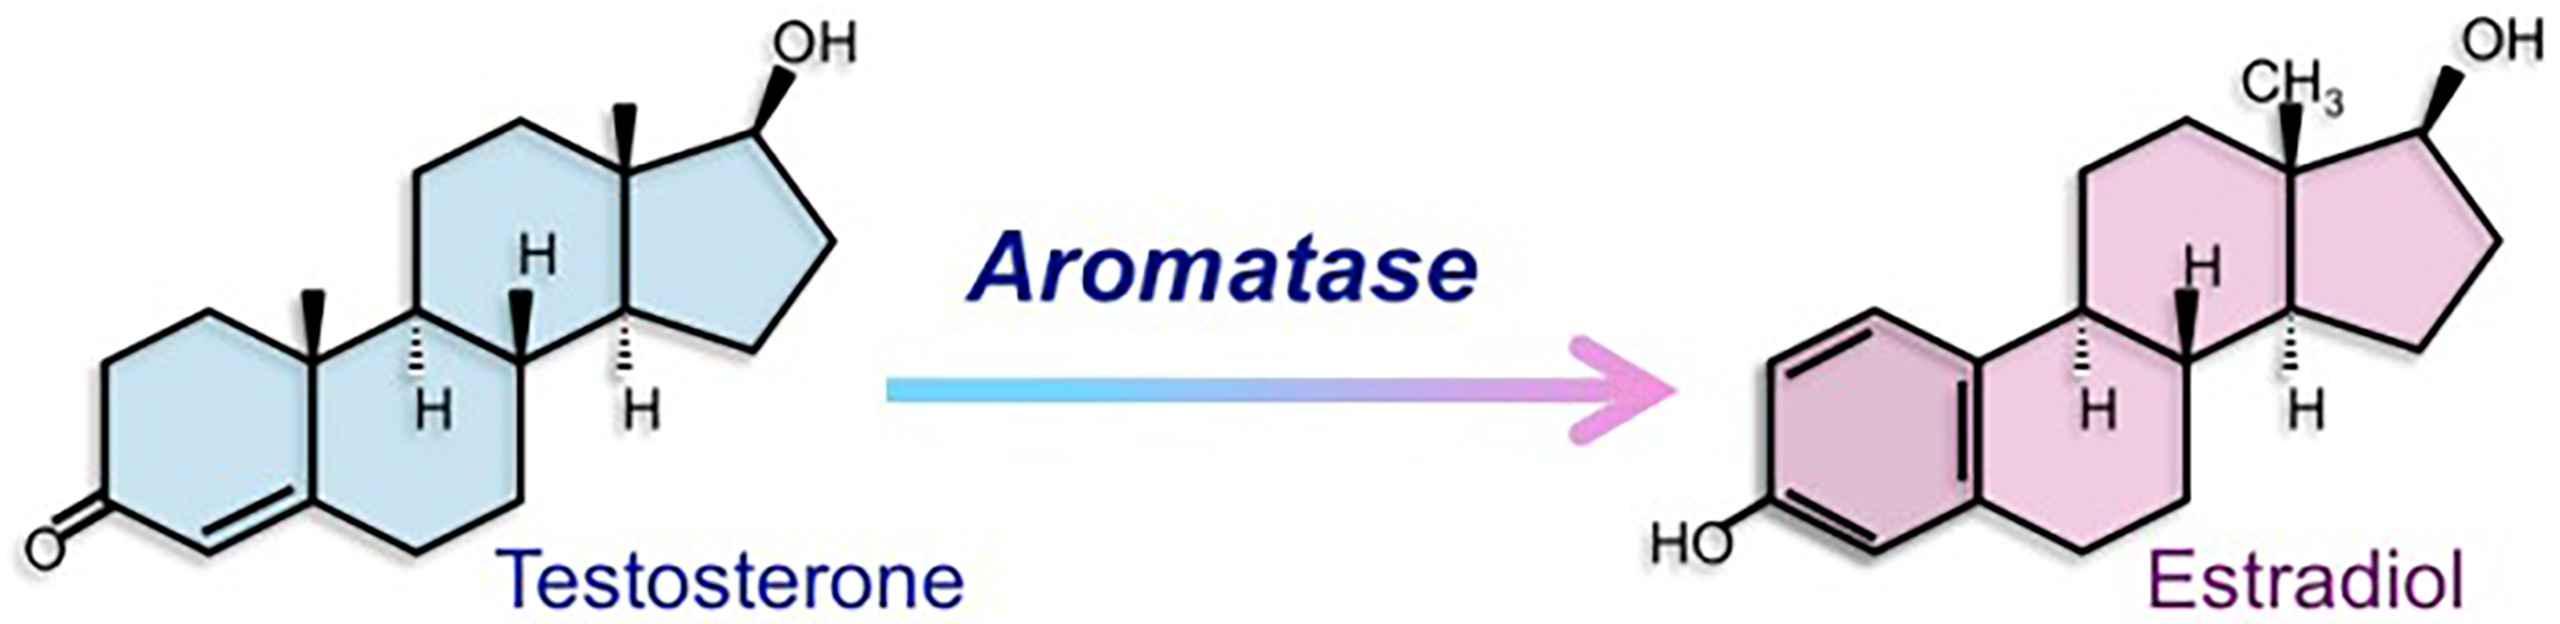 L'enzyme aromatase convertit la testostérone en œstradiol